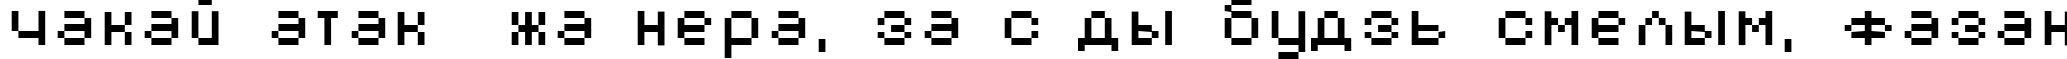 Пример написания шрифтом AuX DotBitC текста на белорусском